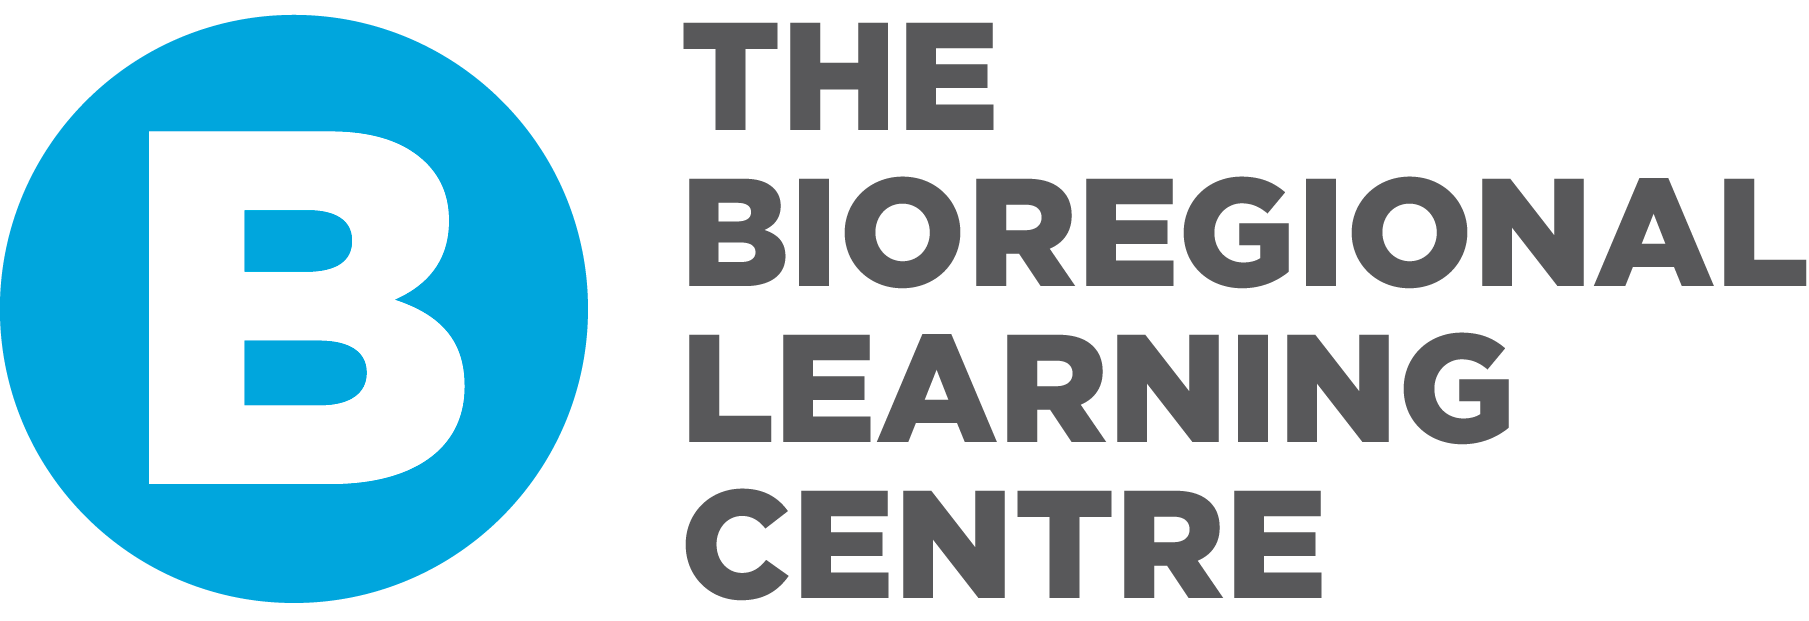 The Bioregional Learning Centre UK